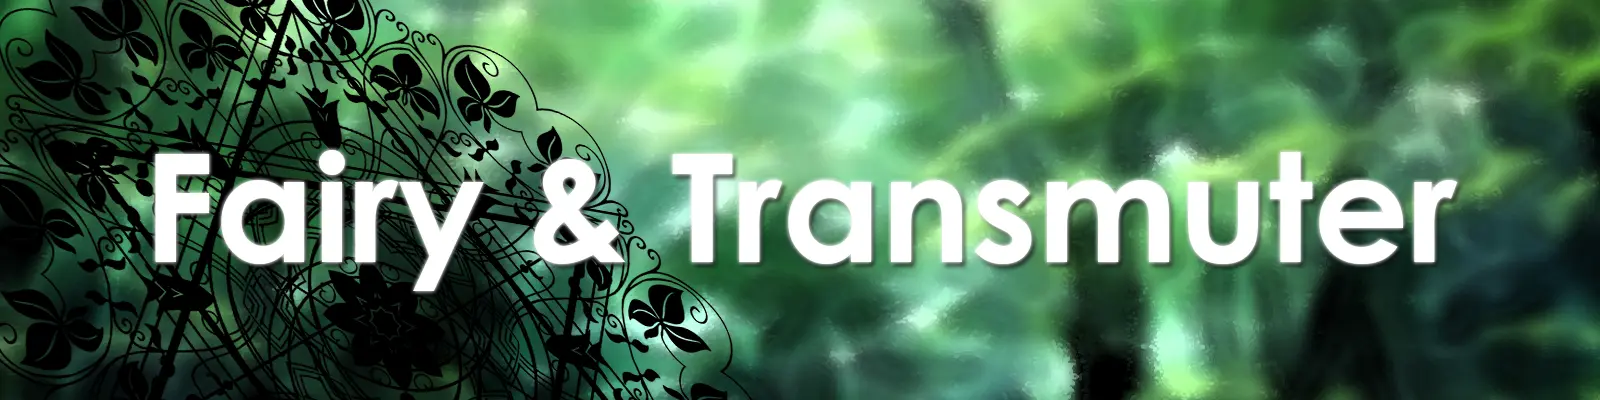 Fairy and Transmuter [v0.0.1] main image